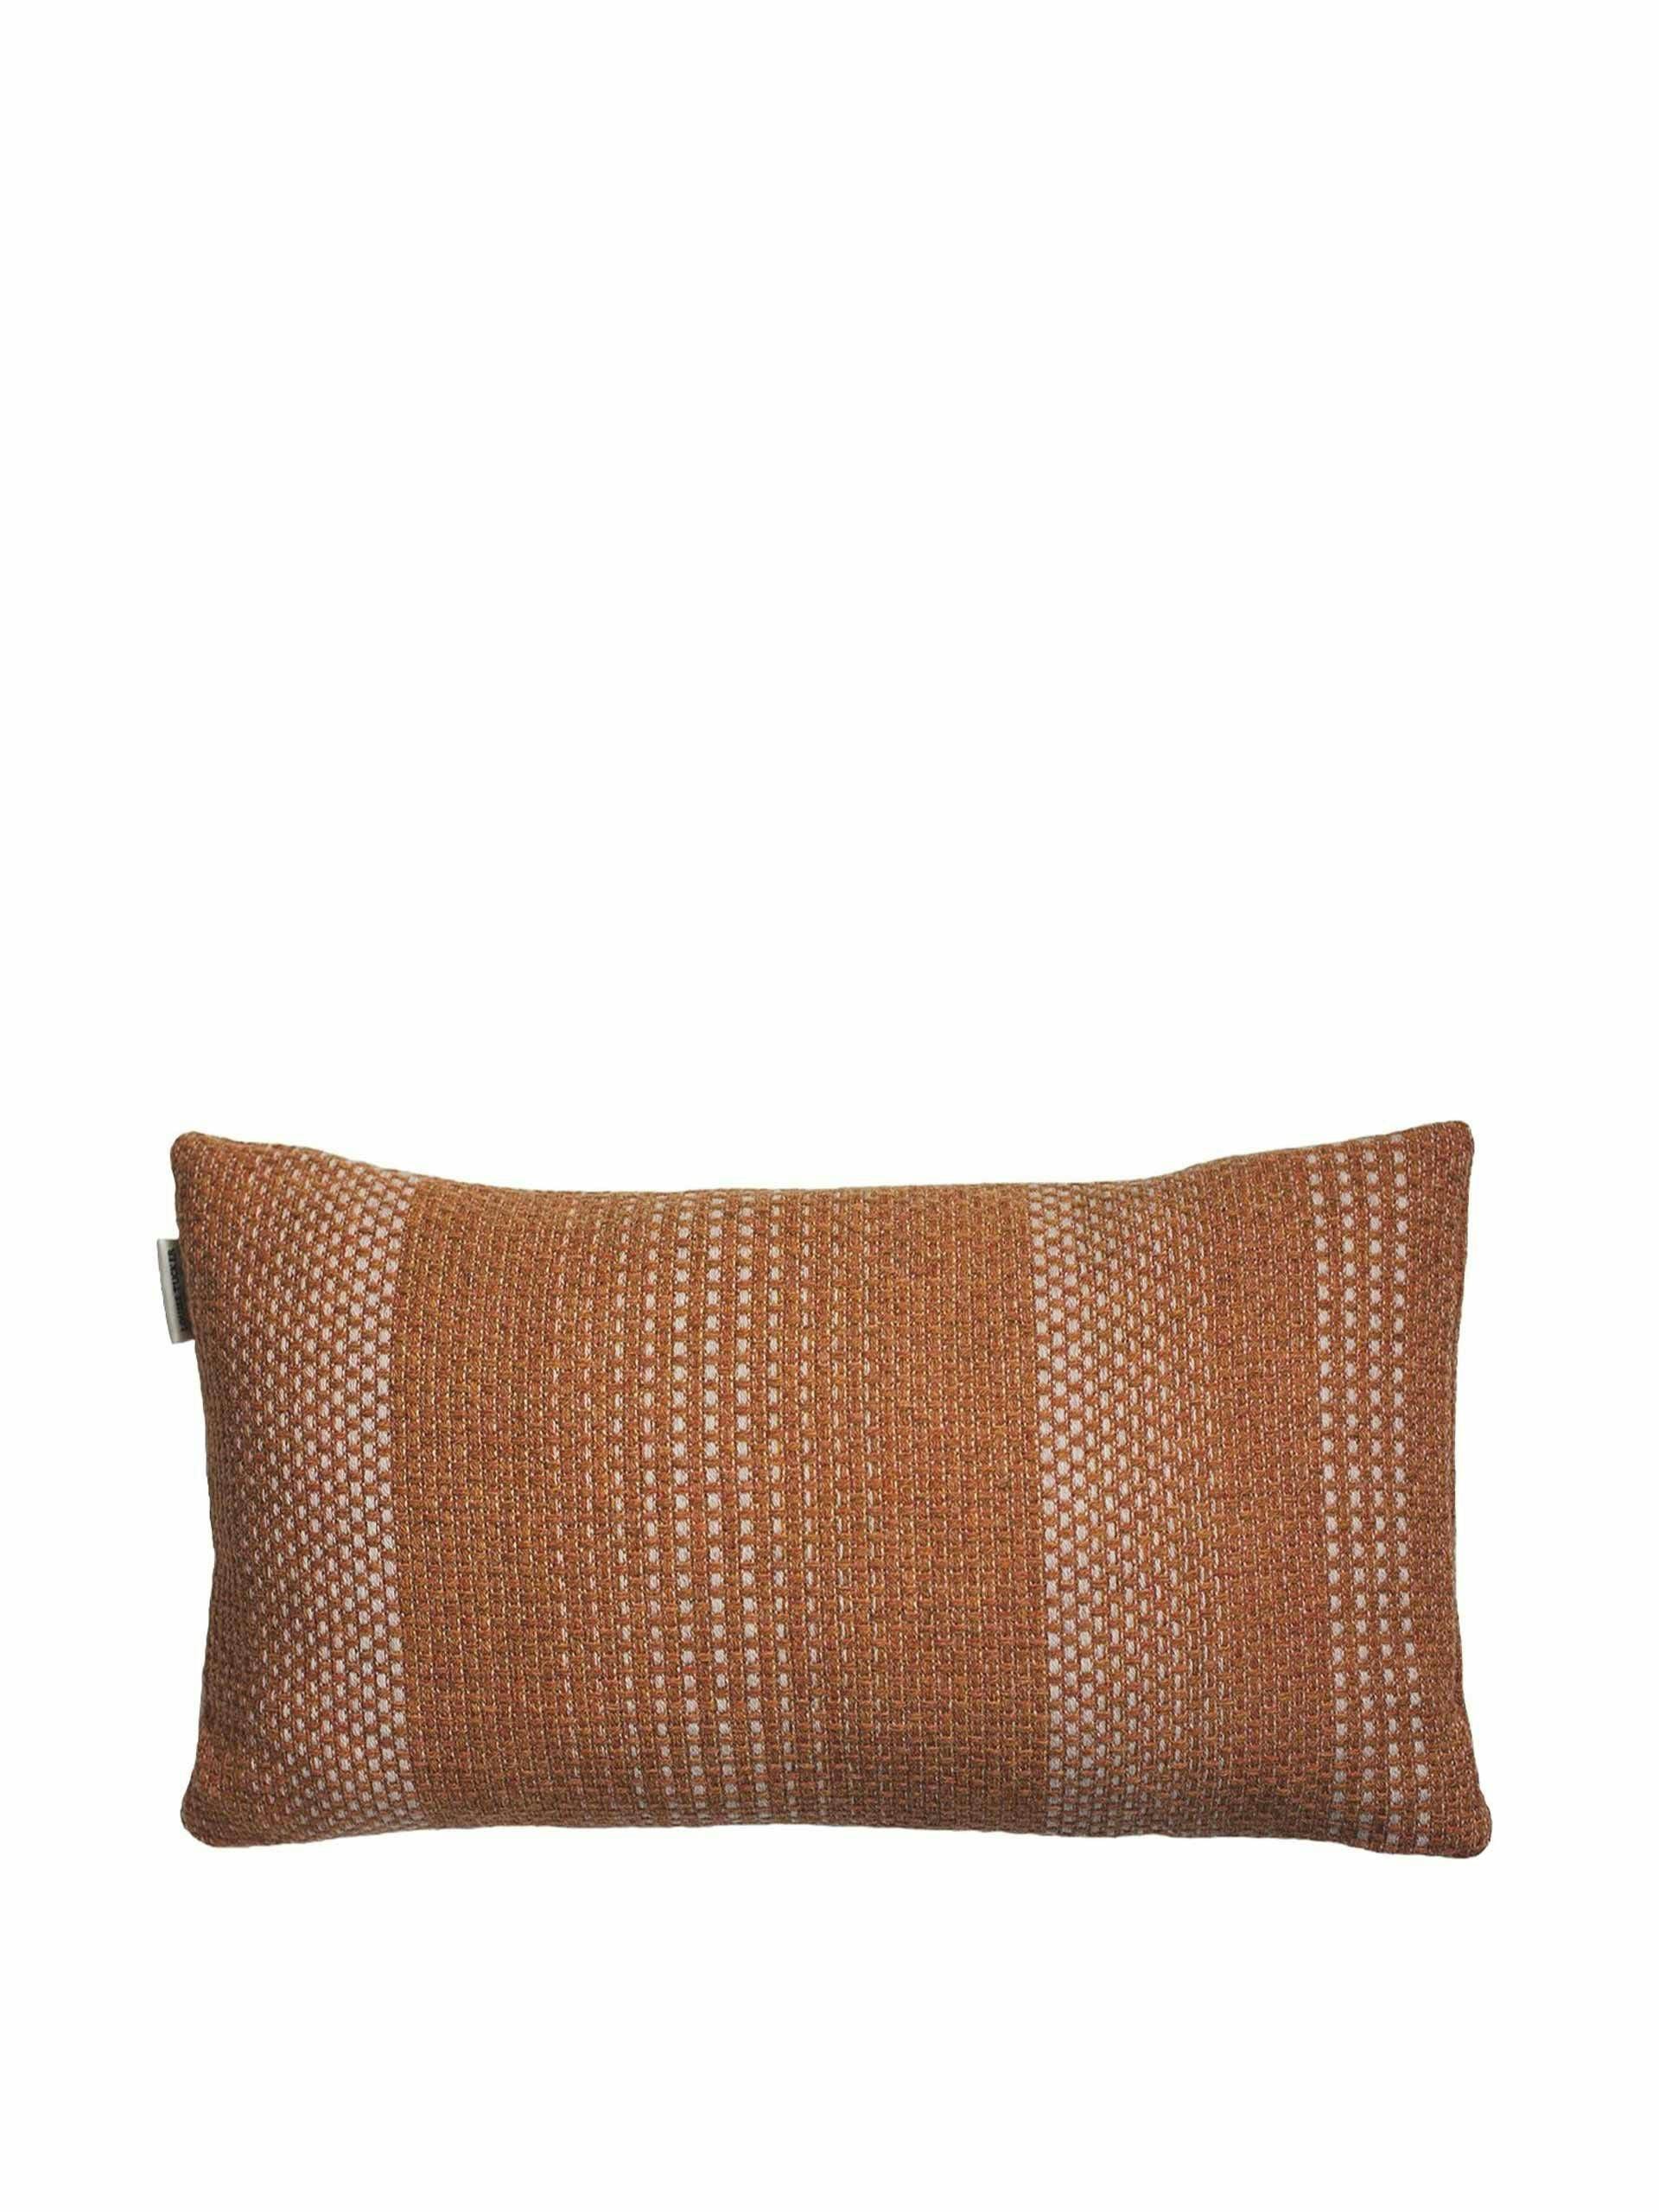 Merino wool cushion - speckle stripe orange